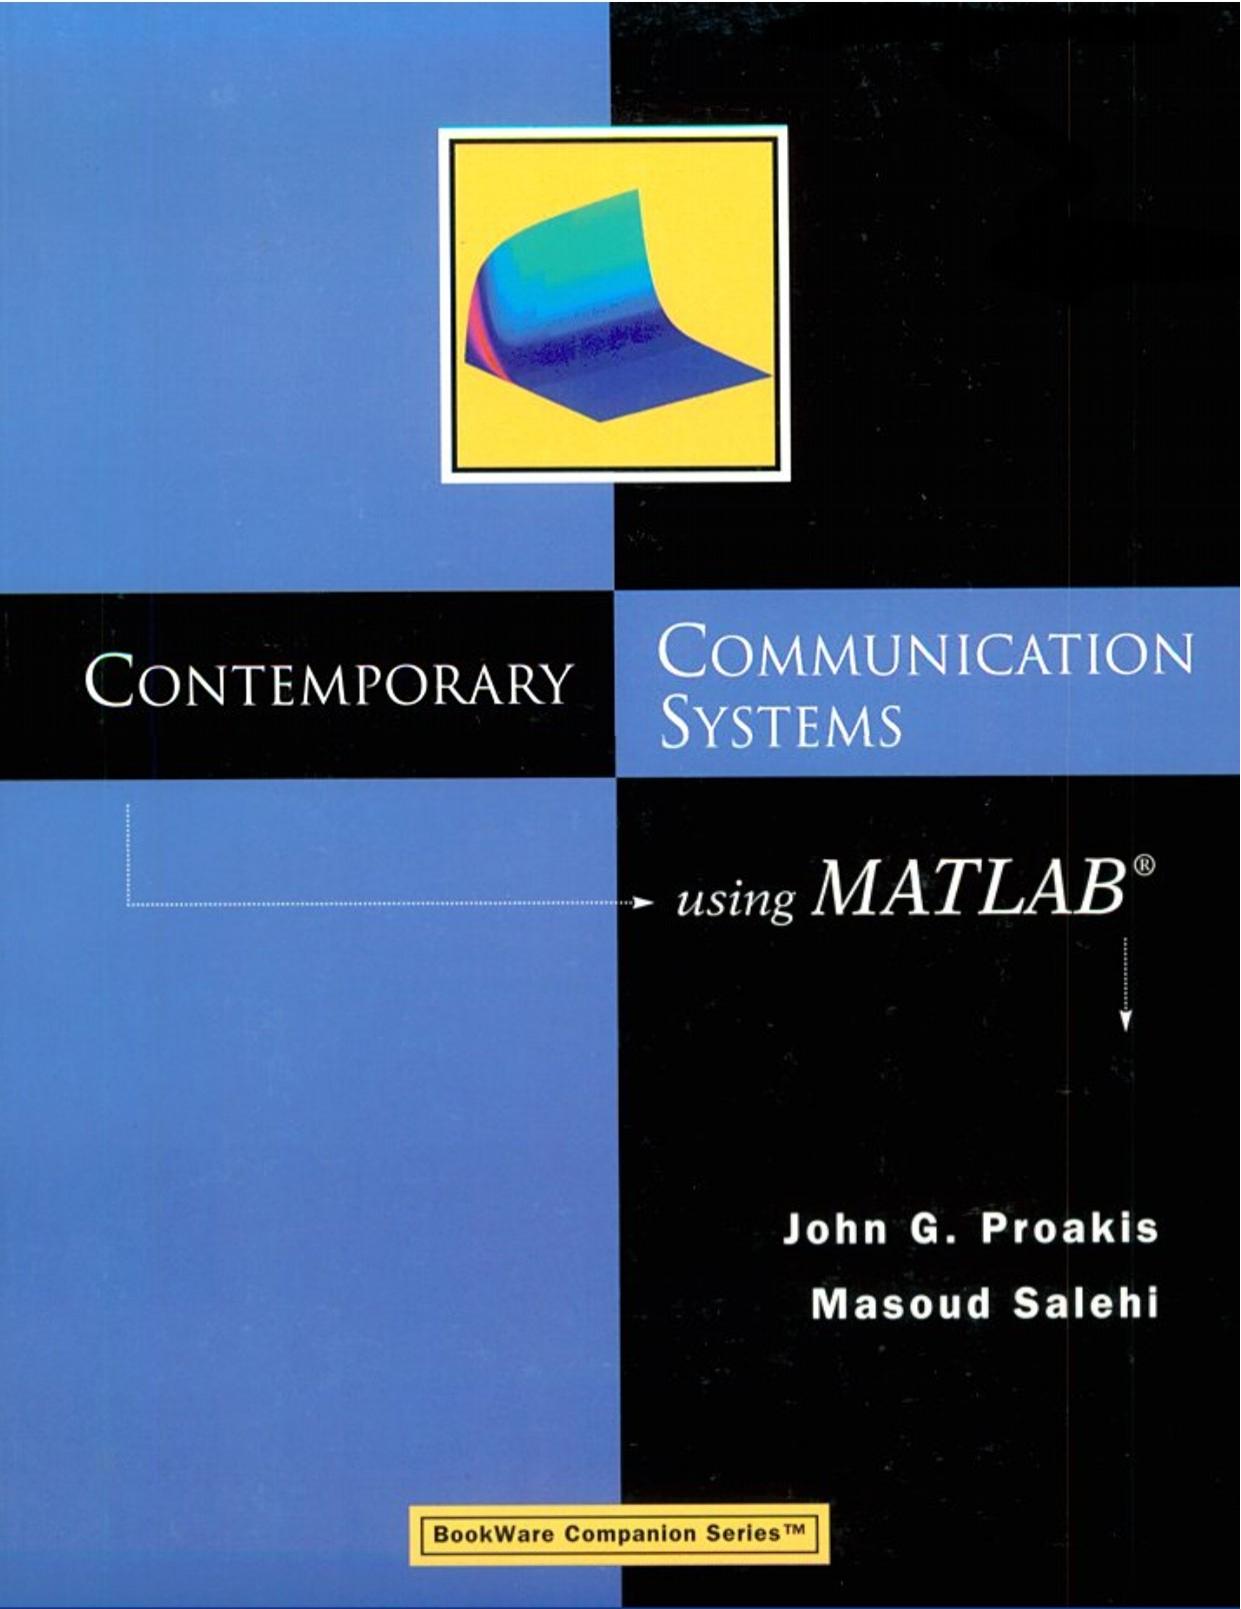 Contemporary Communication Systems Using MATLAB by John G. Proakis & Masoud Salehi